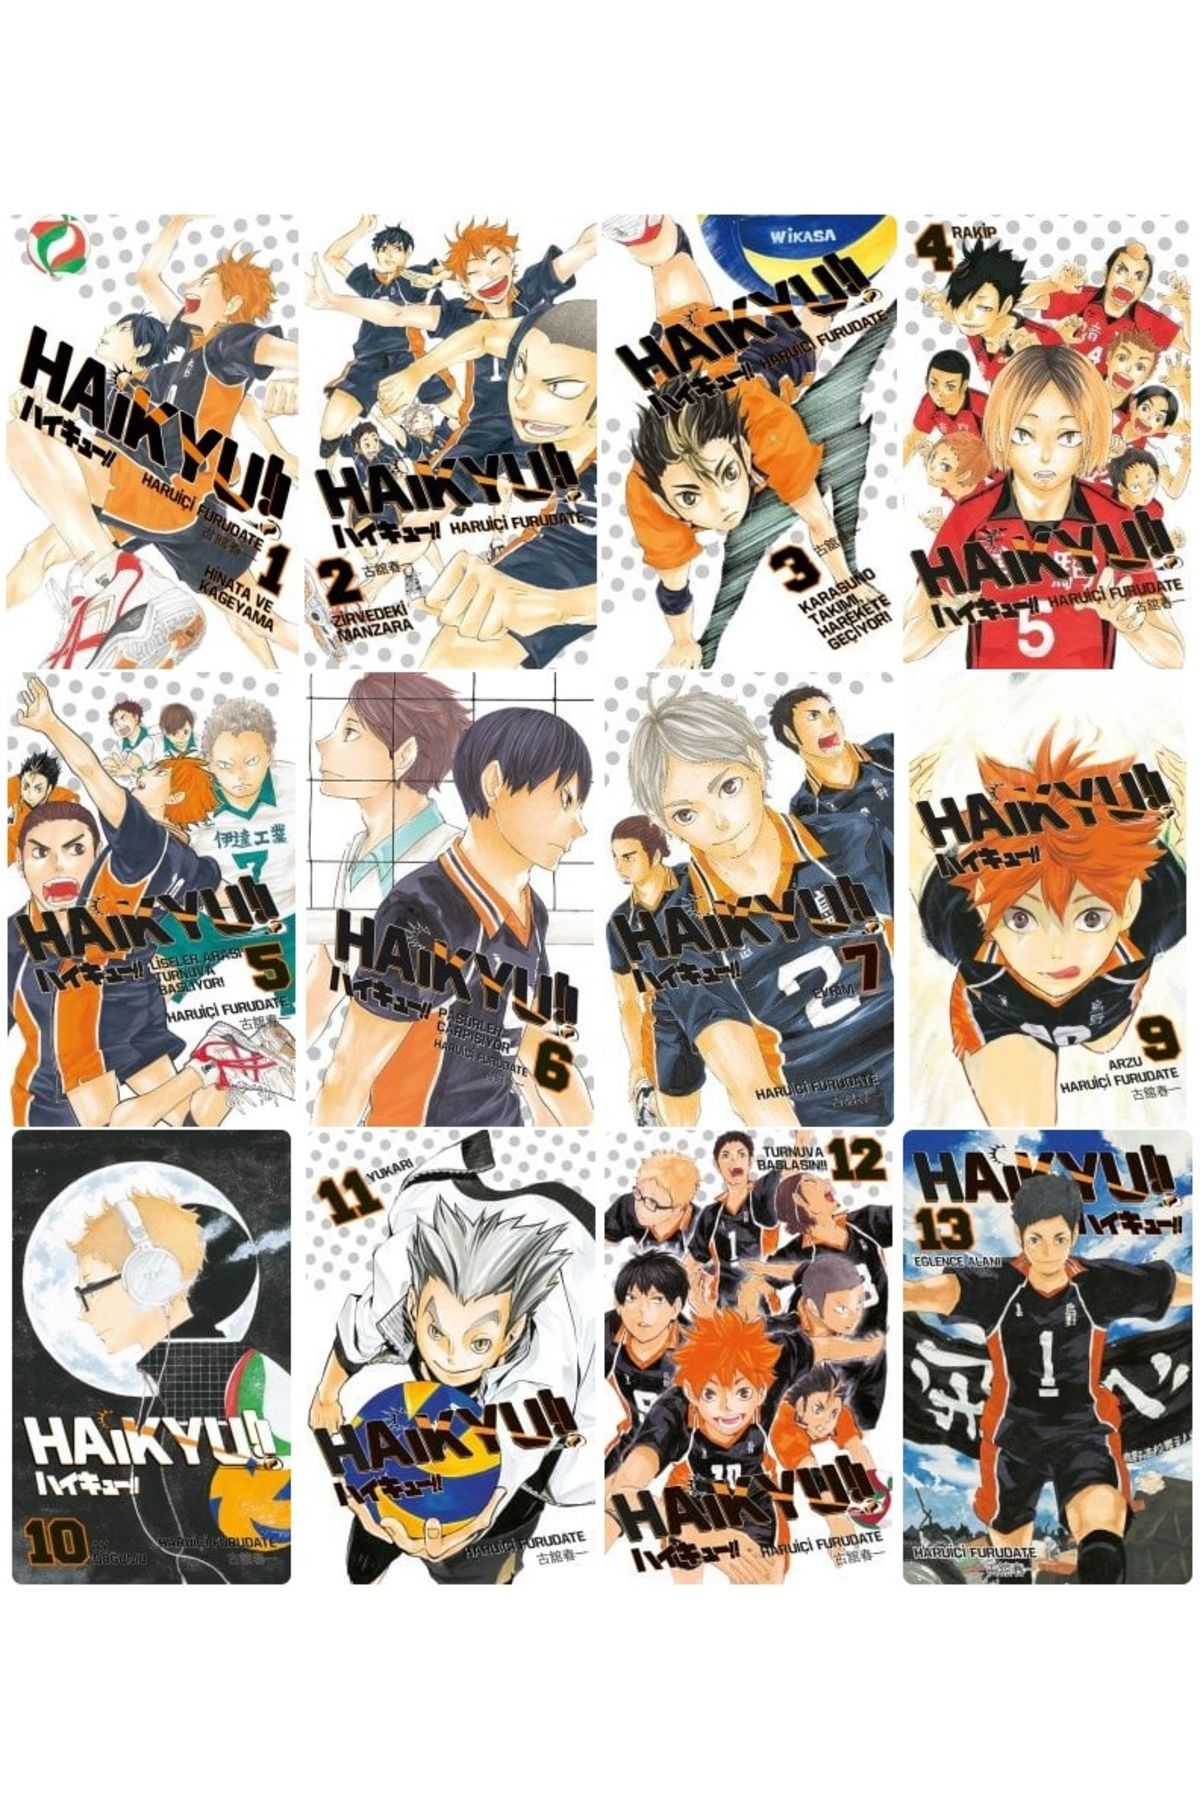 Gerekli Şeyler Yayıncılık Haikyu!!-1-2-3-4-5-6-7-9-10-11-12-13 manga seti (12 kitap)